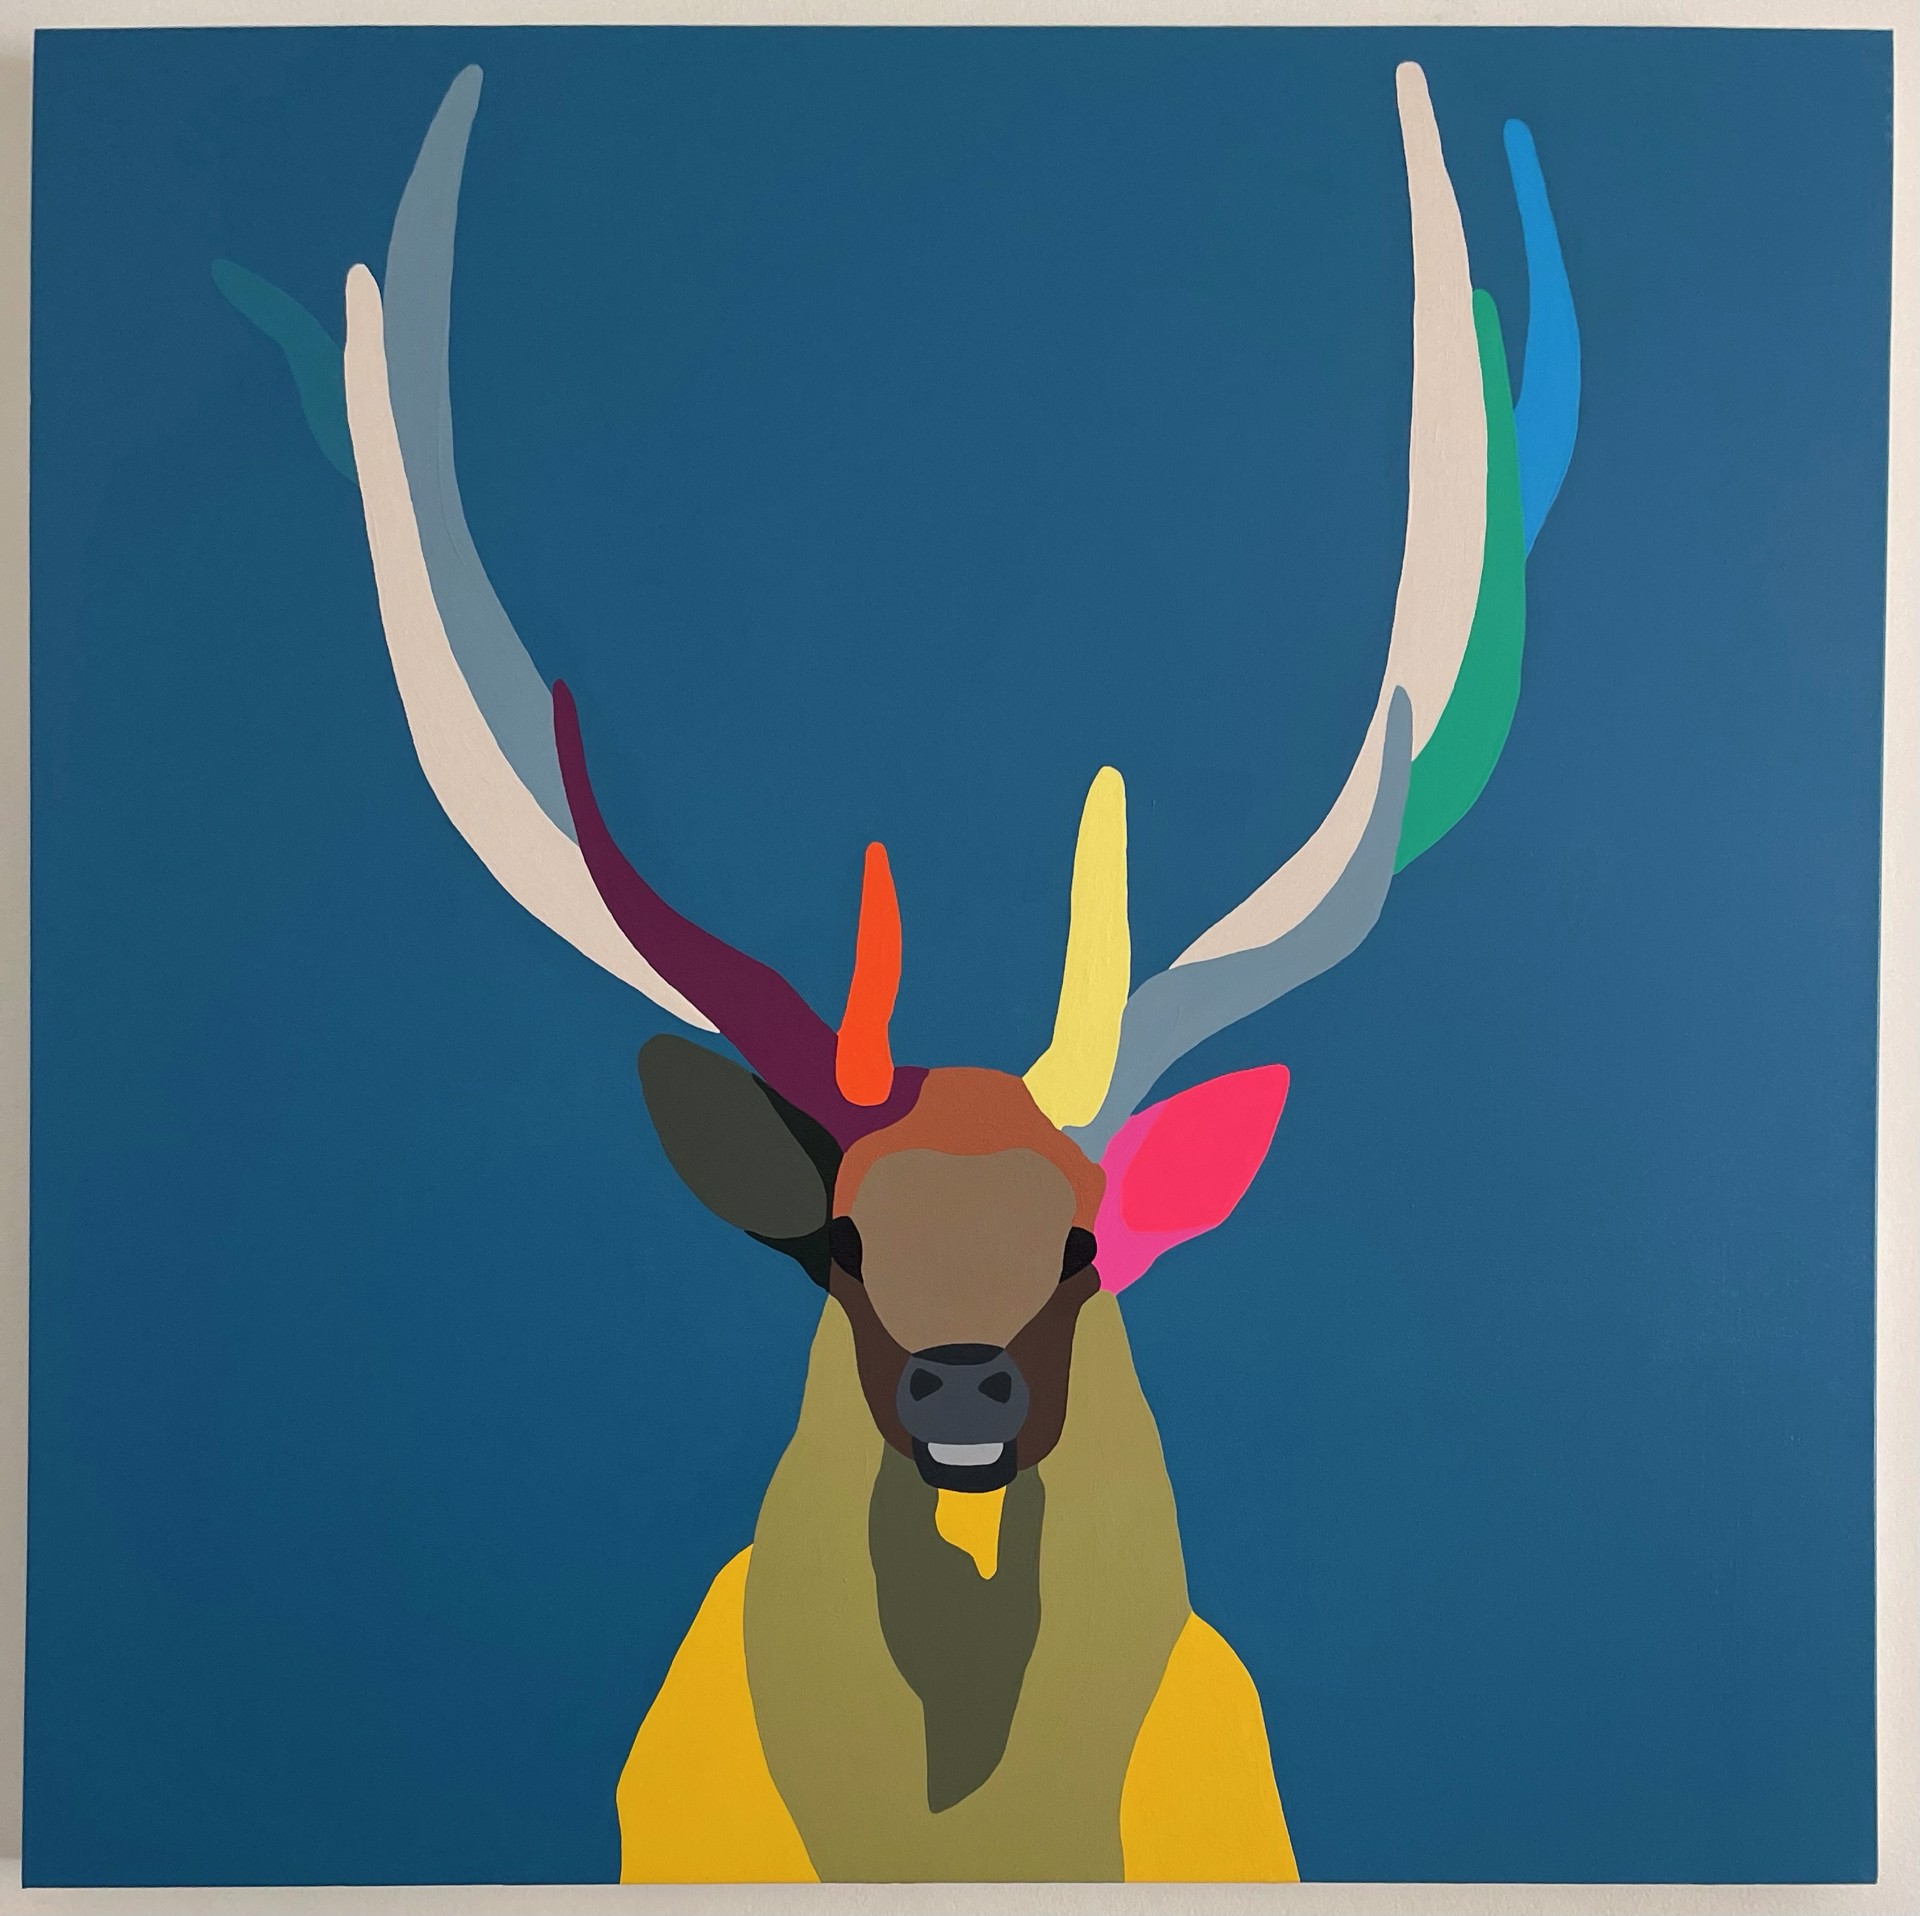 Deer by Michael Remando